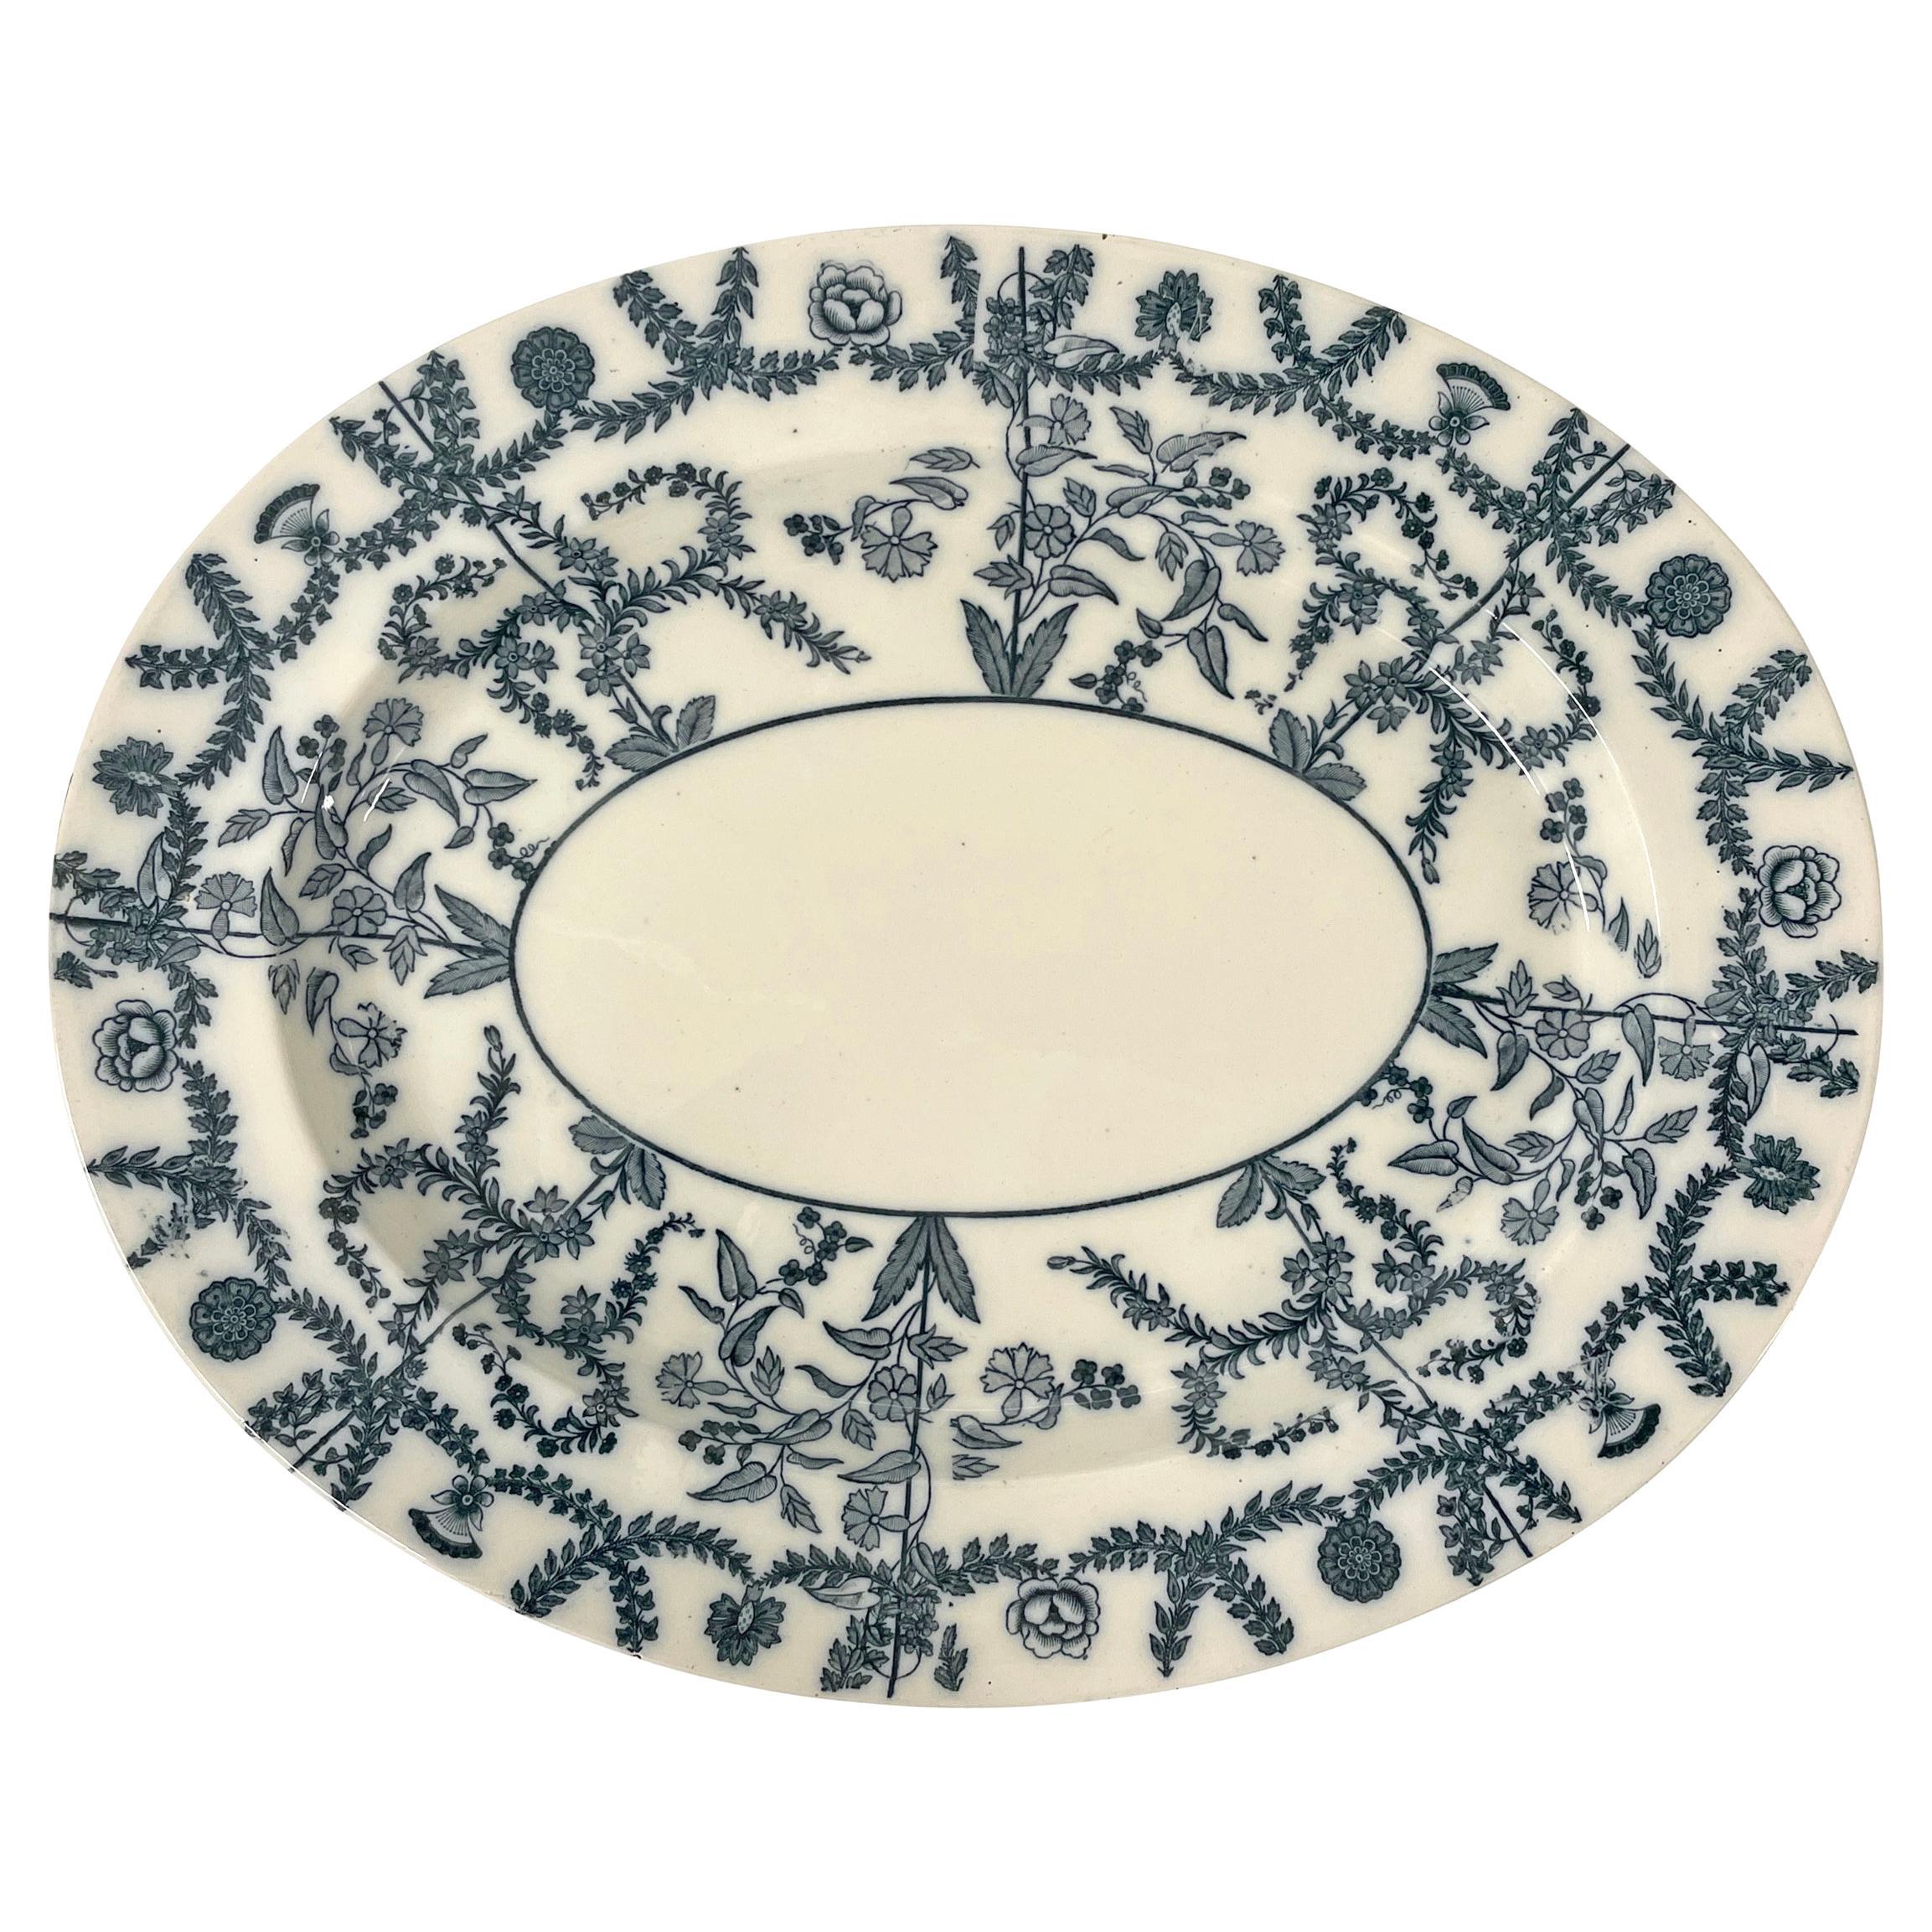 19th Century Spode Blue and White Platter